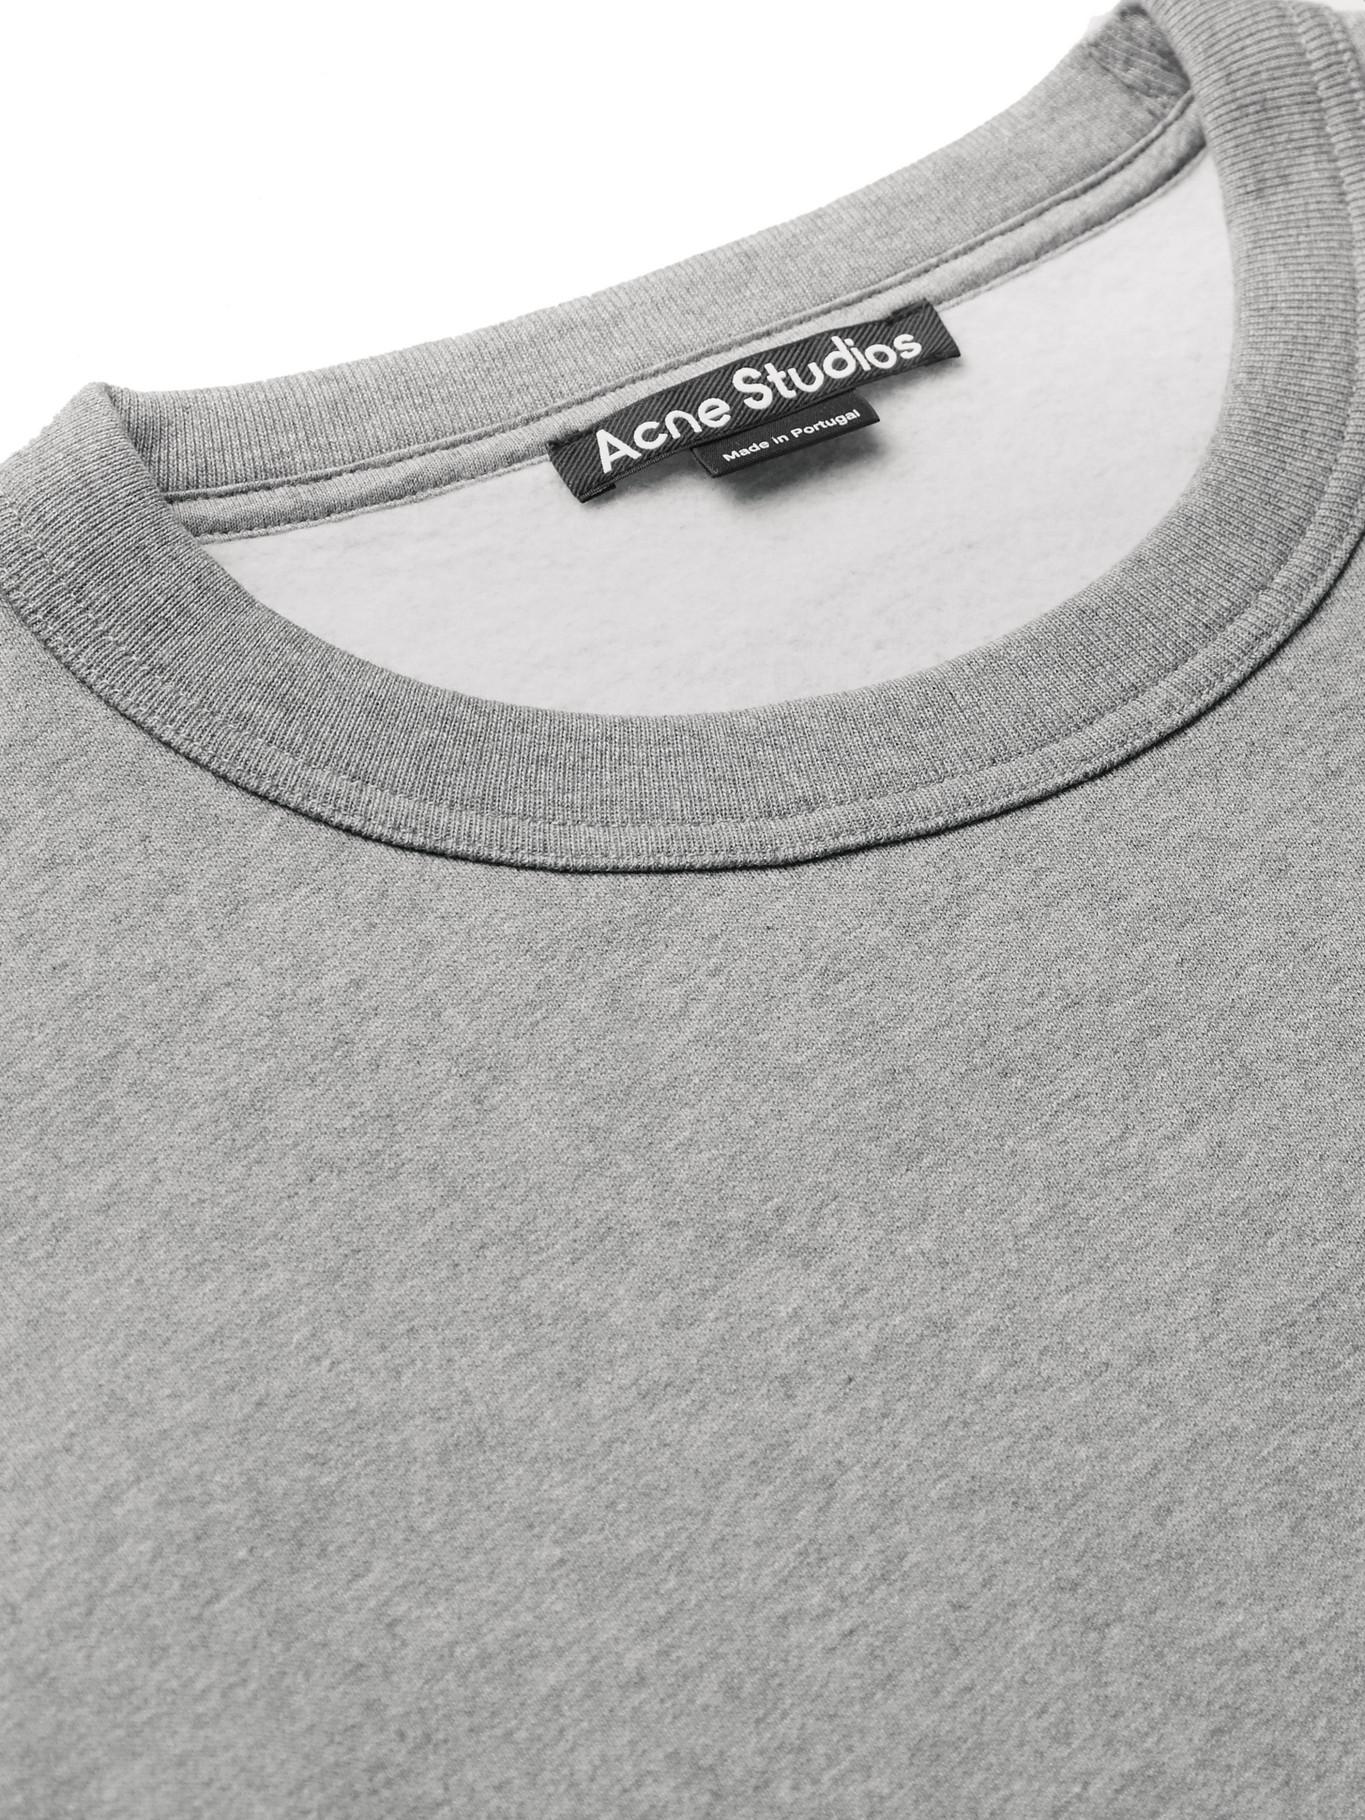 Acne Studios Fairview Logo-appliquéd Fleece-back Cotton-jersey Sweatshirt  in Grey for Men - Lyst